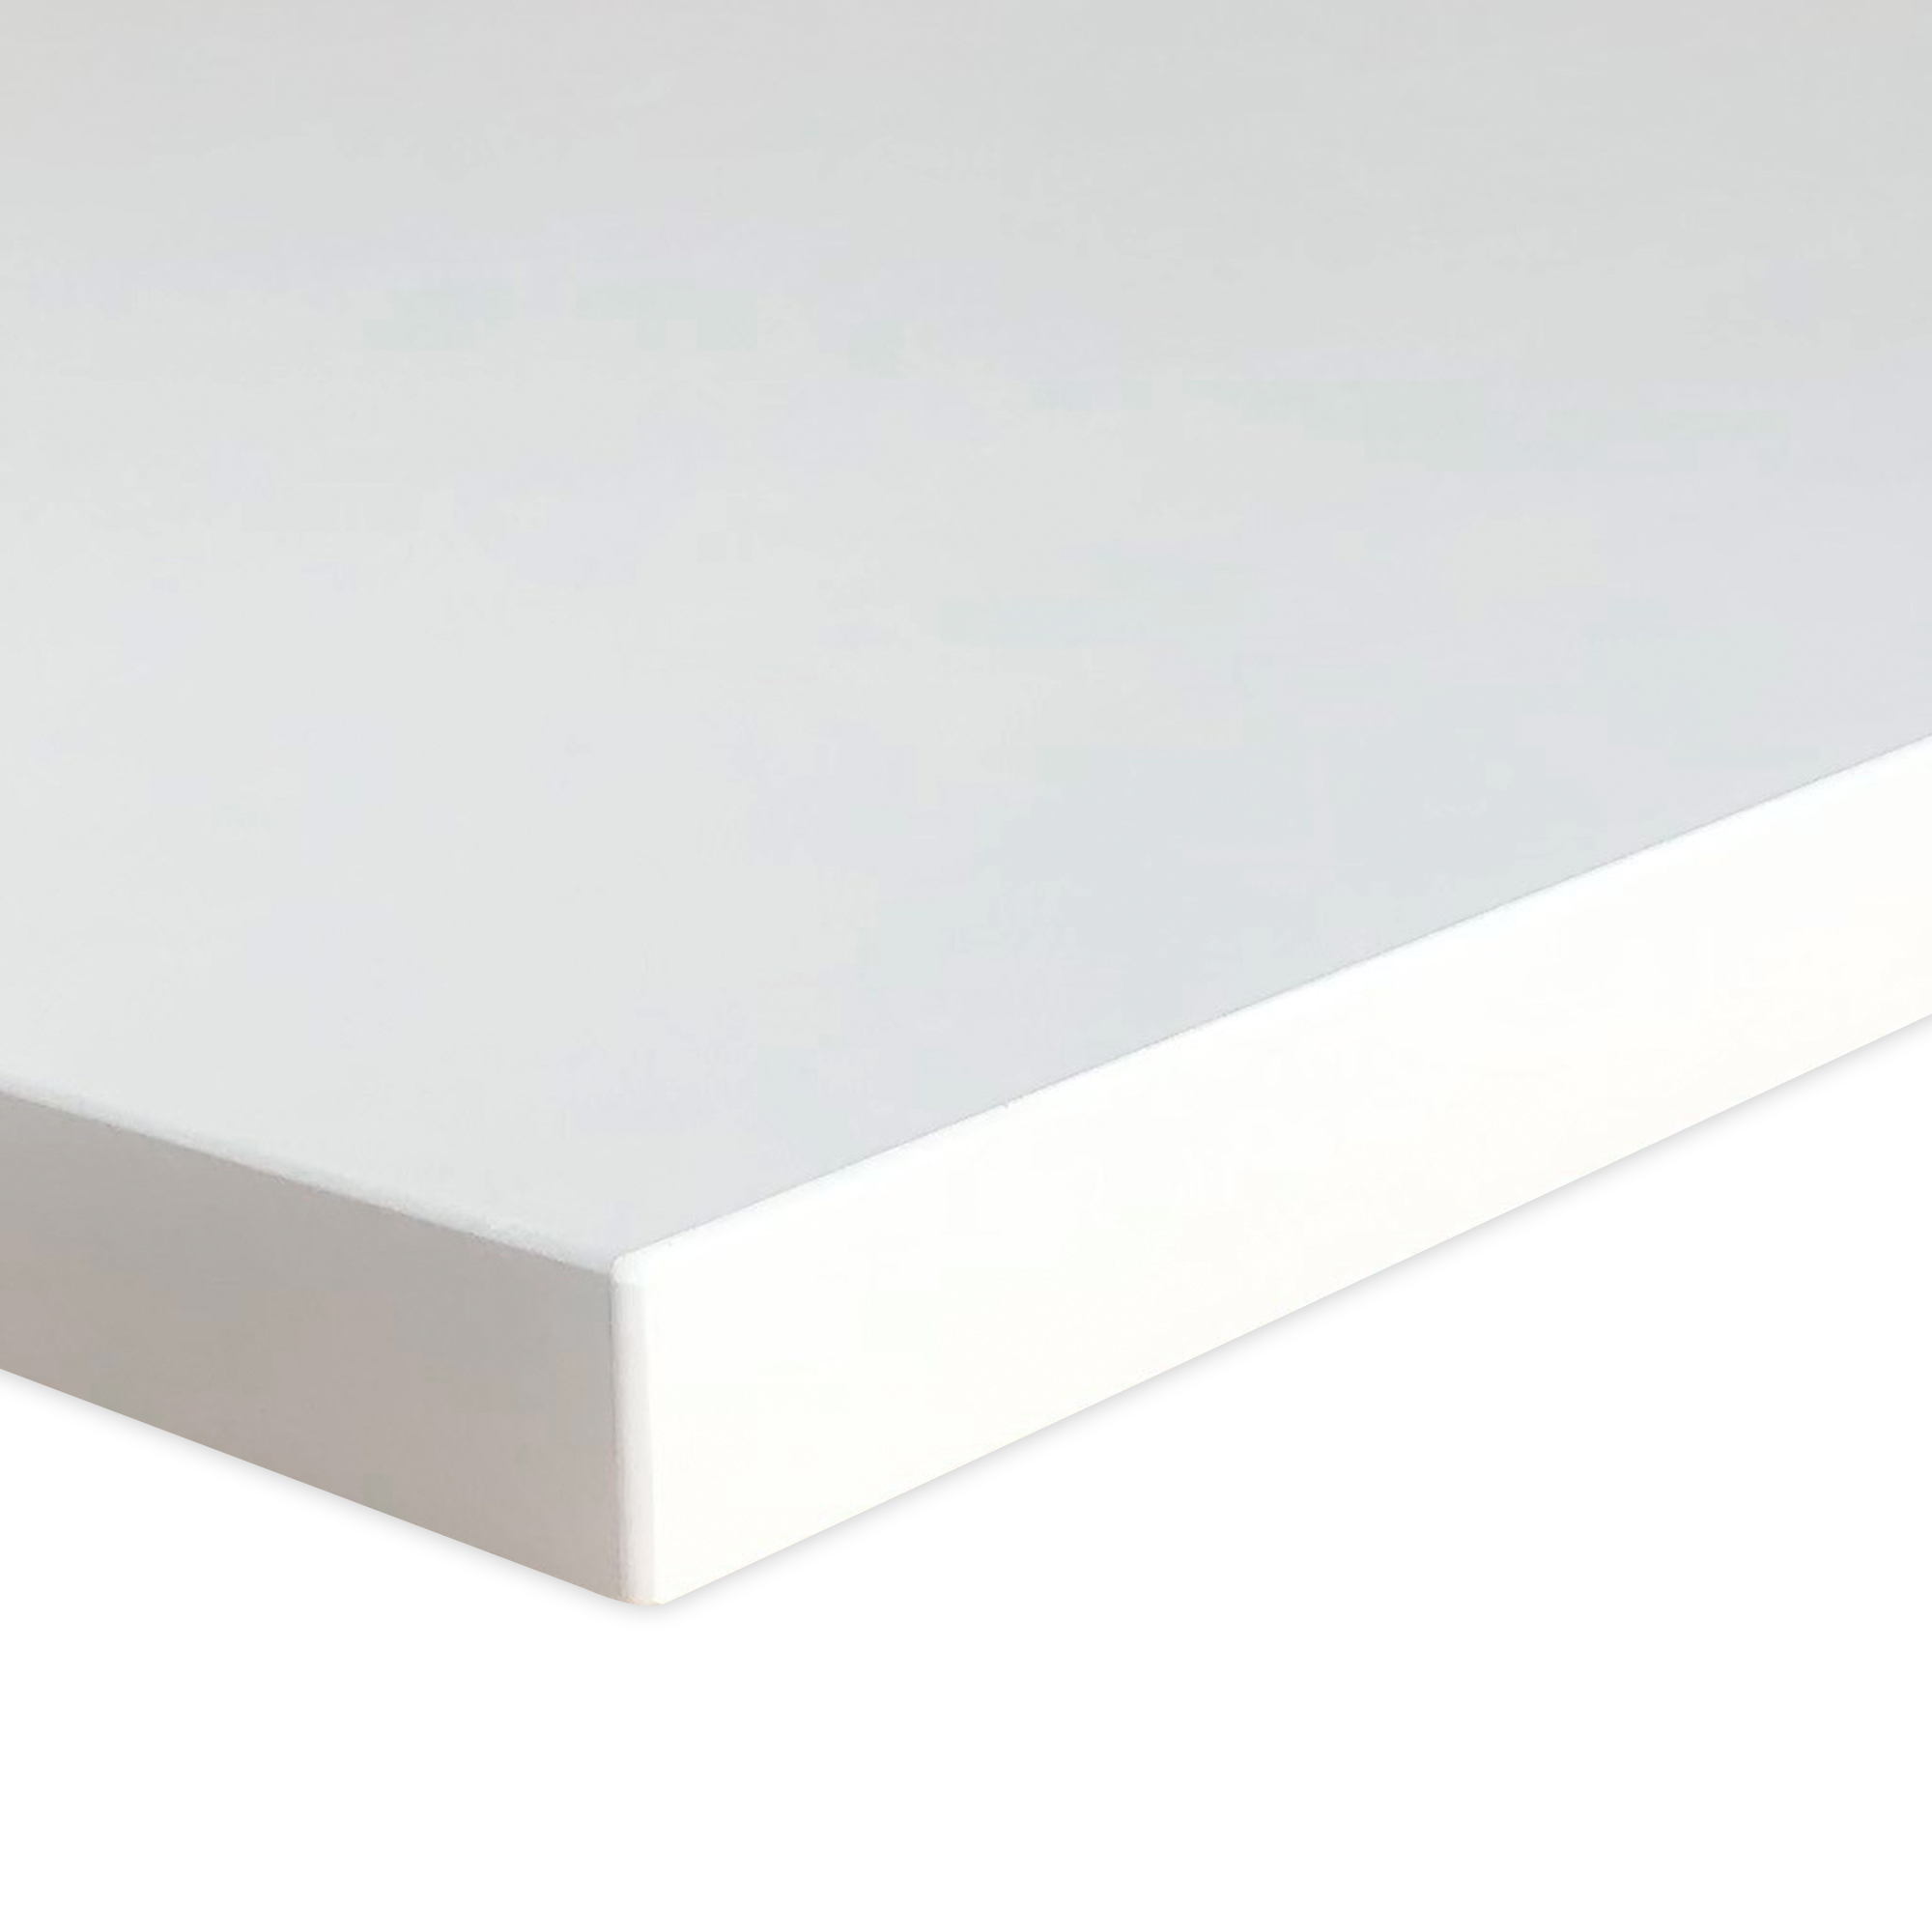 Tabletop | 160x80 cm | White